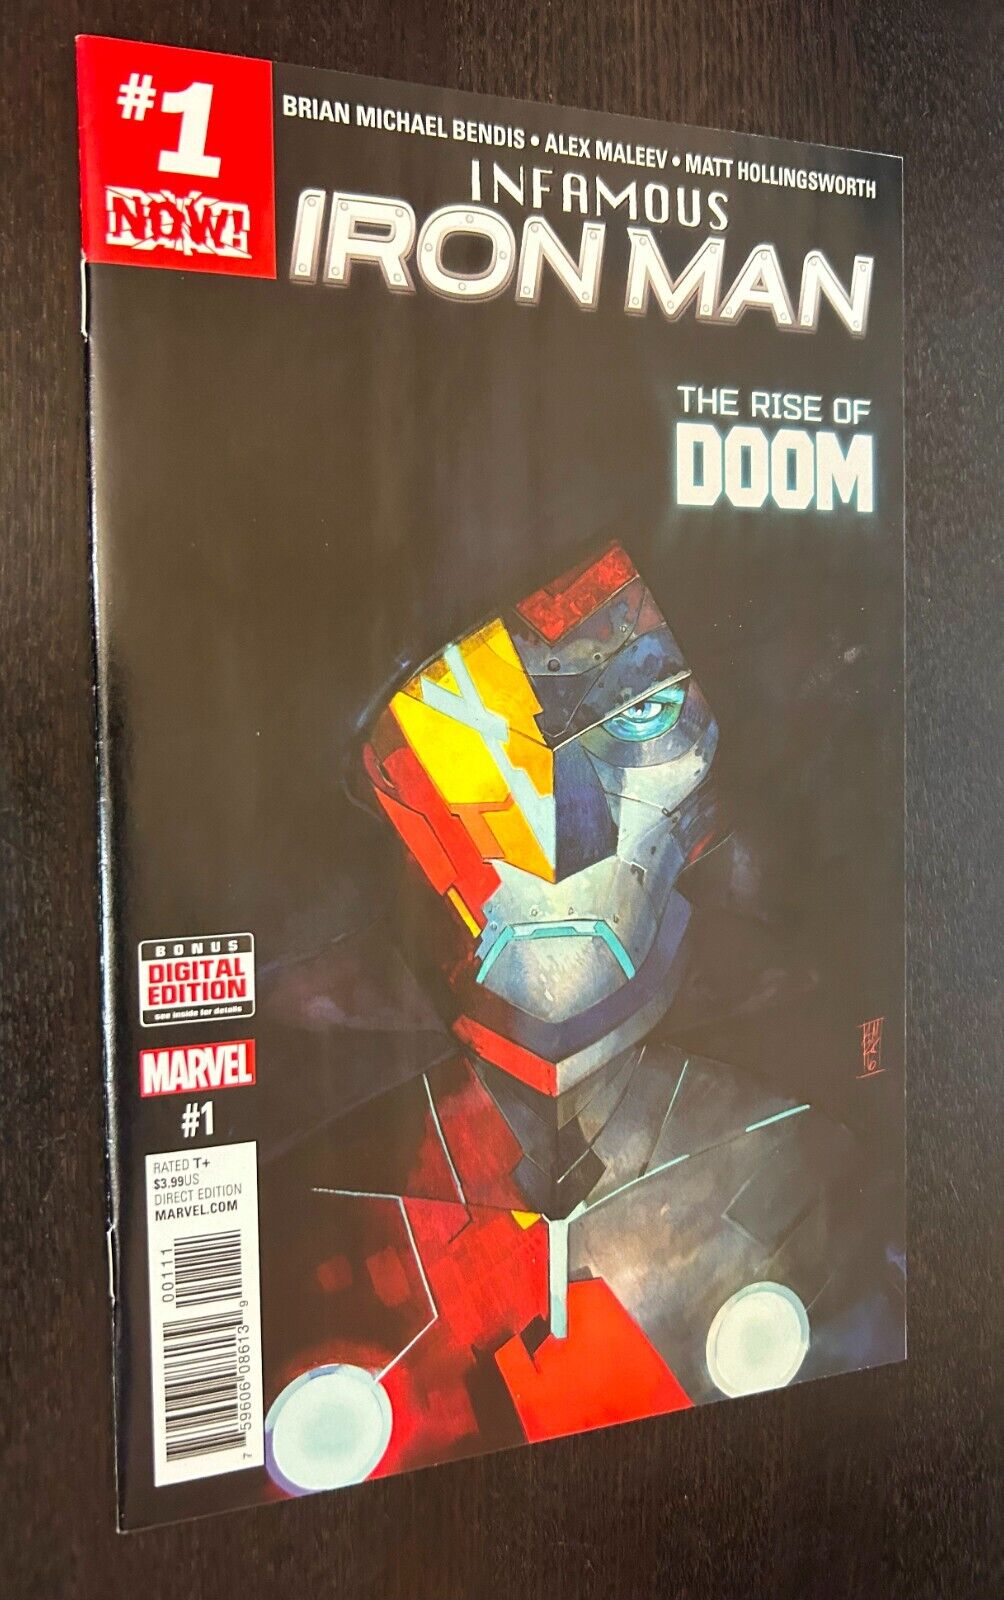 INFAMOUS IRON MAN #1 (Marvel Comics 2016) -- Rise of Doom -- NM-